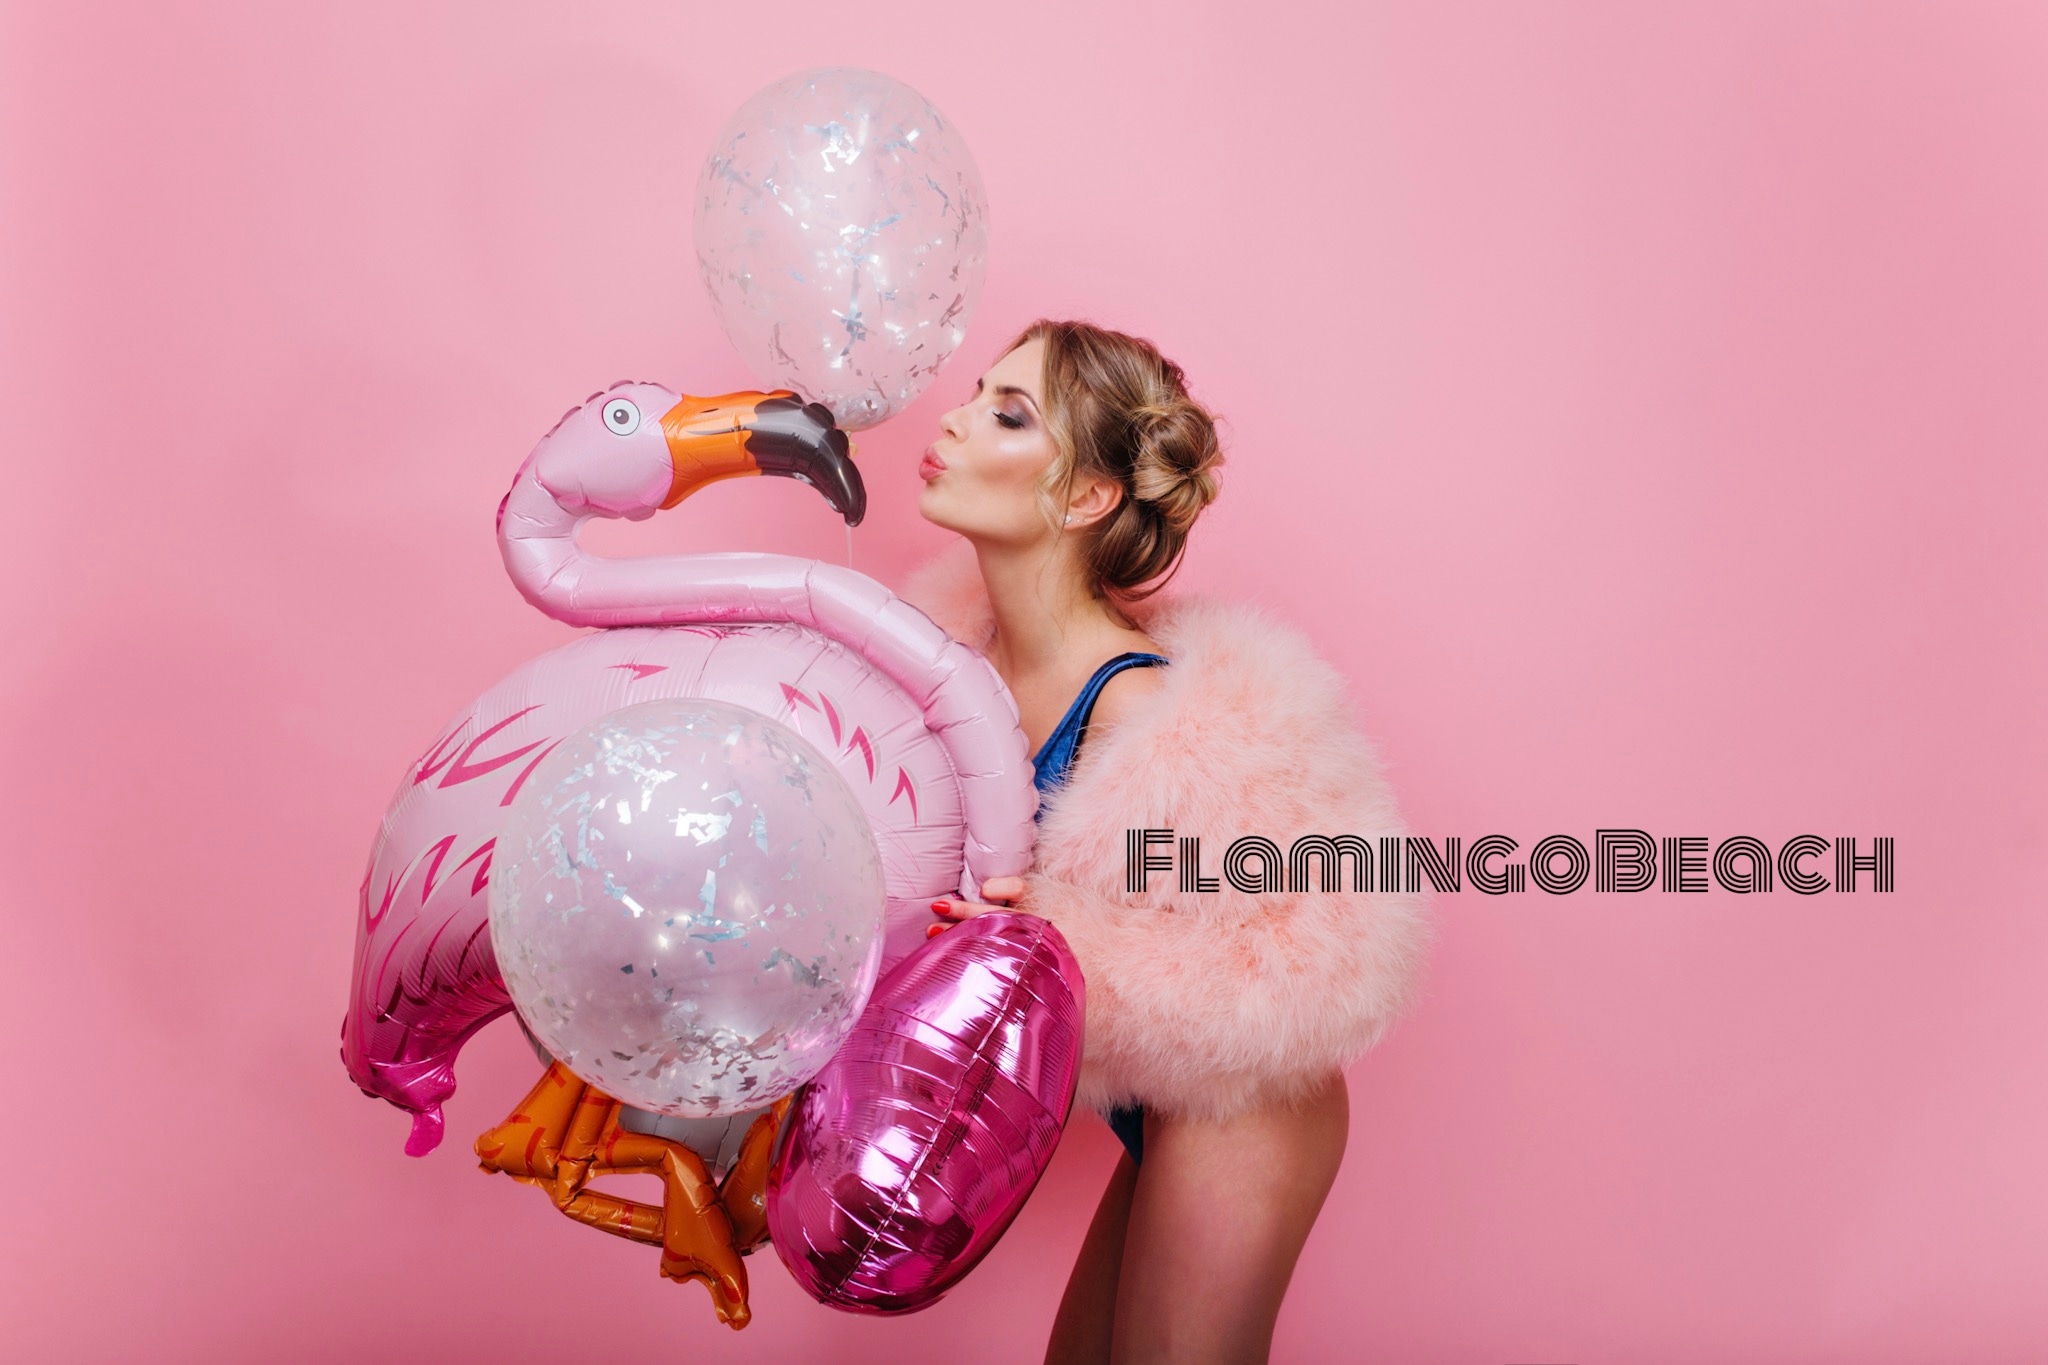 【FlamingoBeach】 フラミンゴビーチ インポートビキニ 4000種類以上